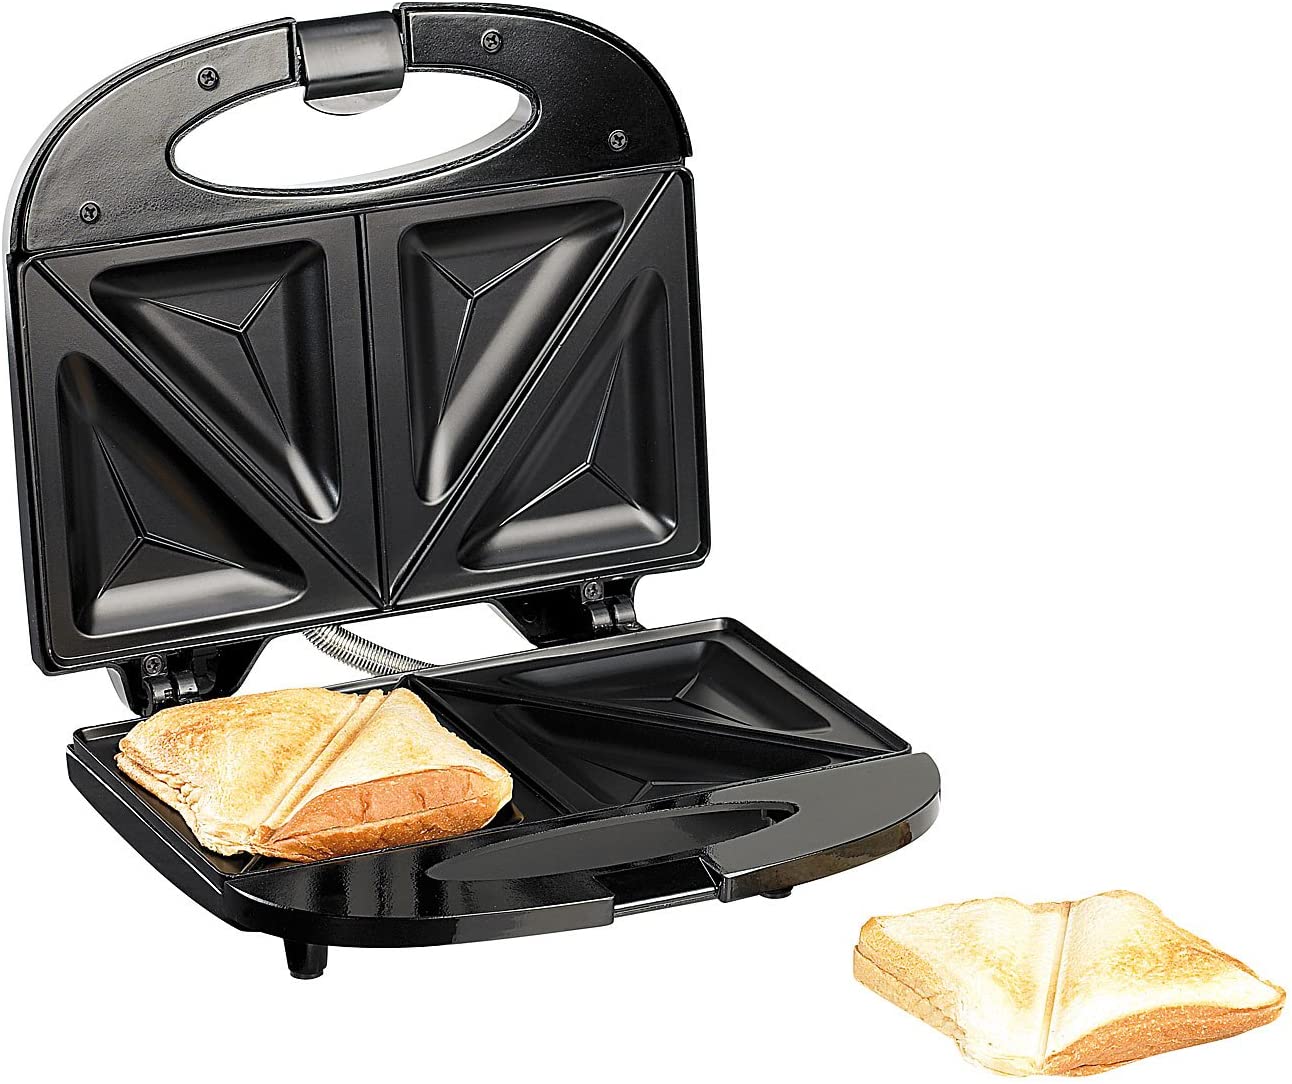 ROSENSTEIN & SOHNE Rosenstein & Söhne sandwich maker, non-stick coated sandwich toaster for 4 servings, 750 watts